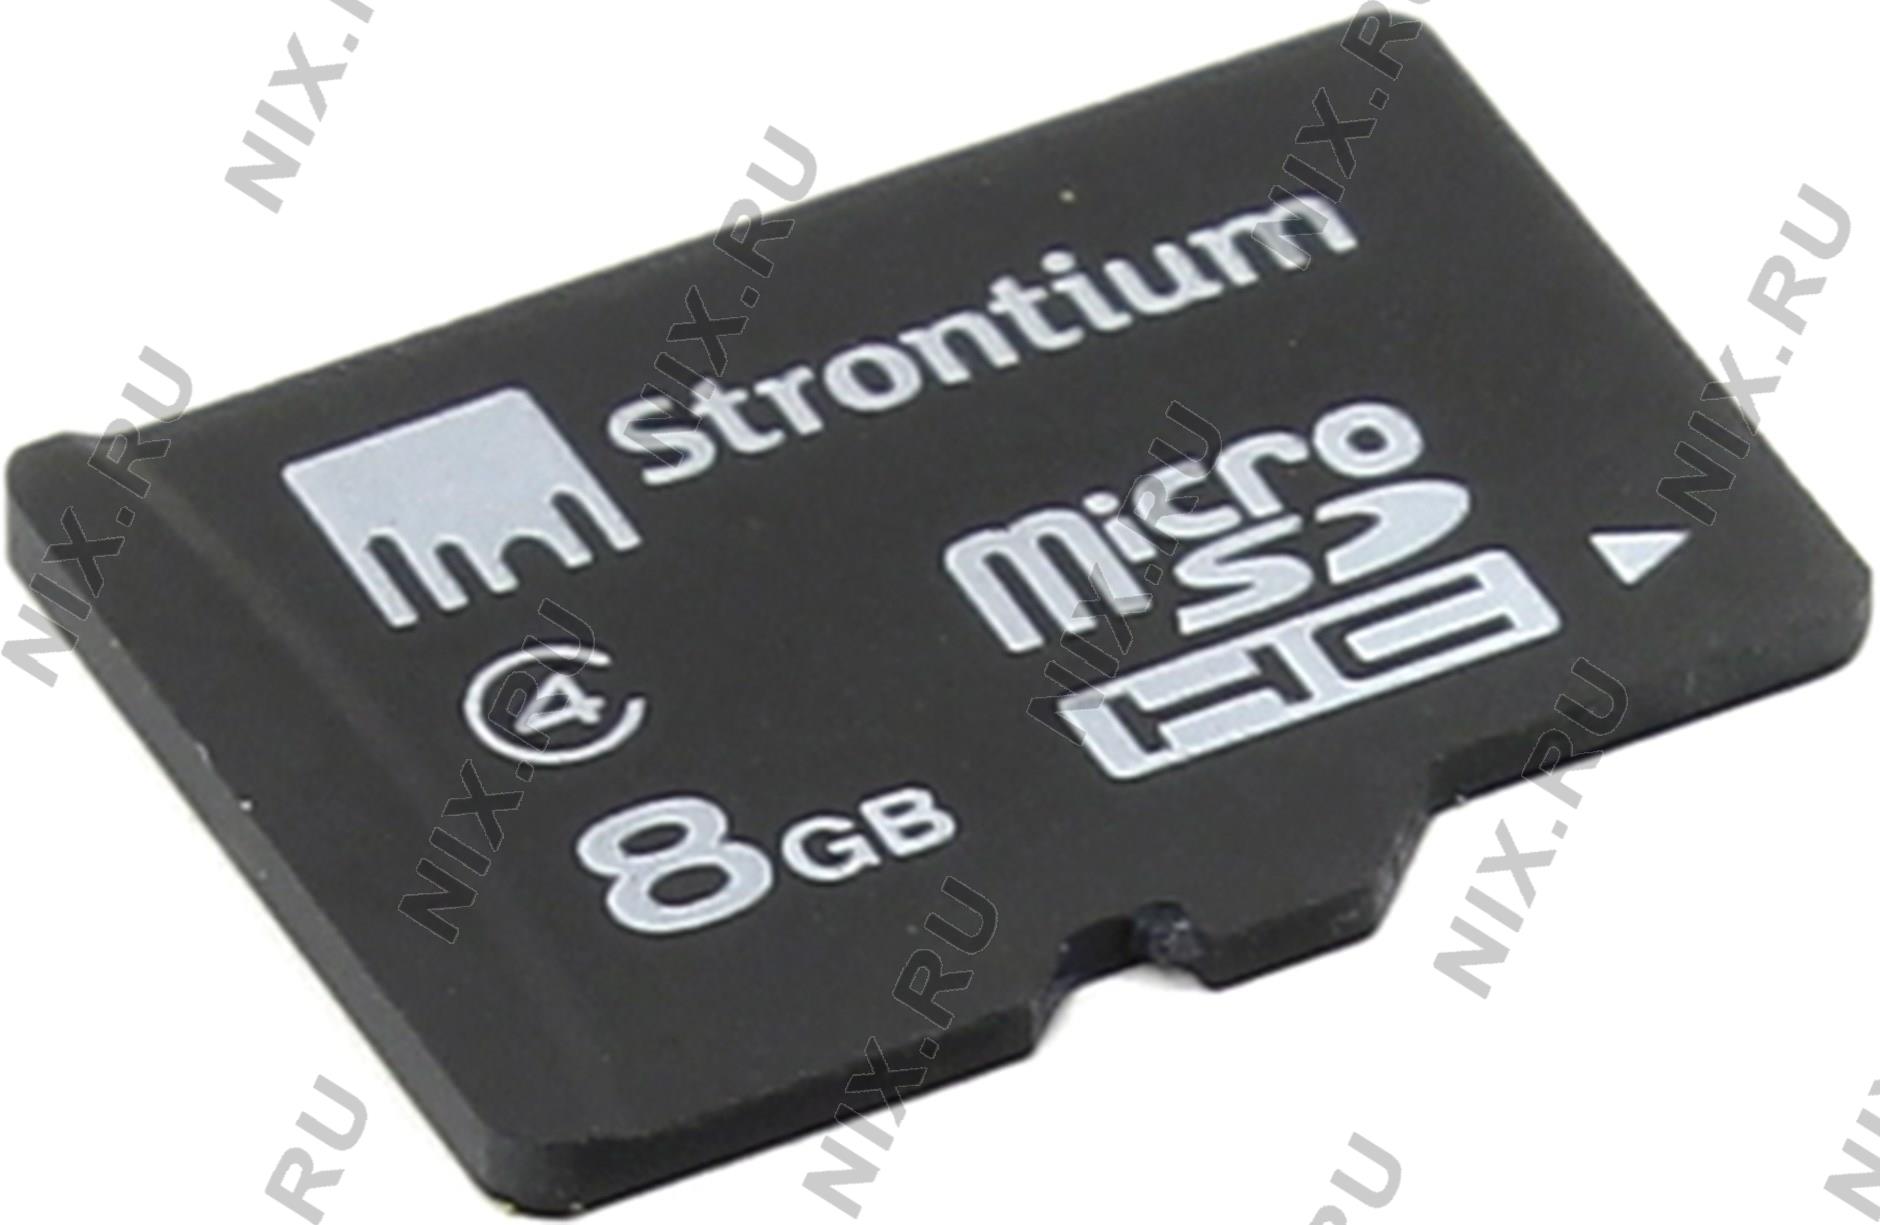    microSDHC  8Gb Strontium [SR8GTFC4R] Class4